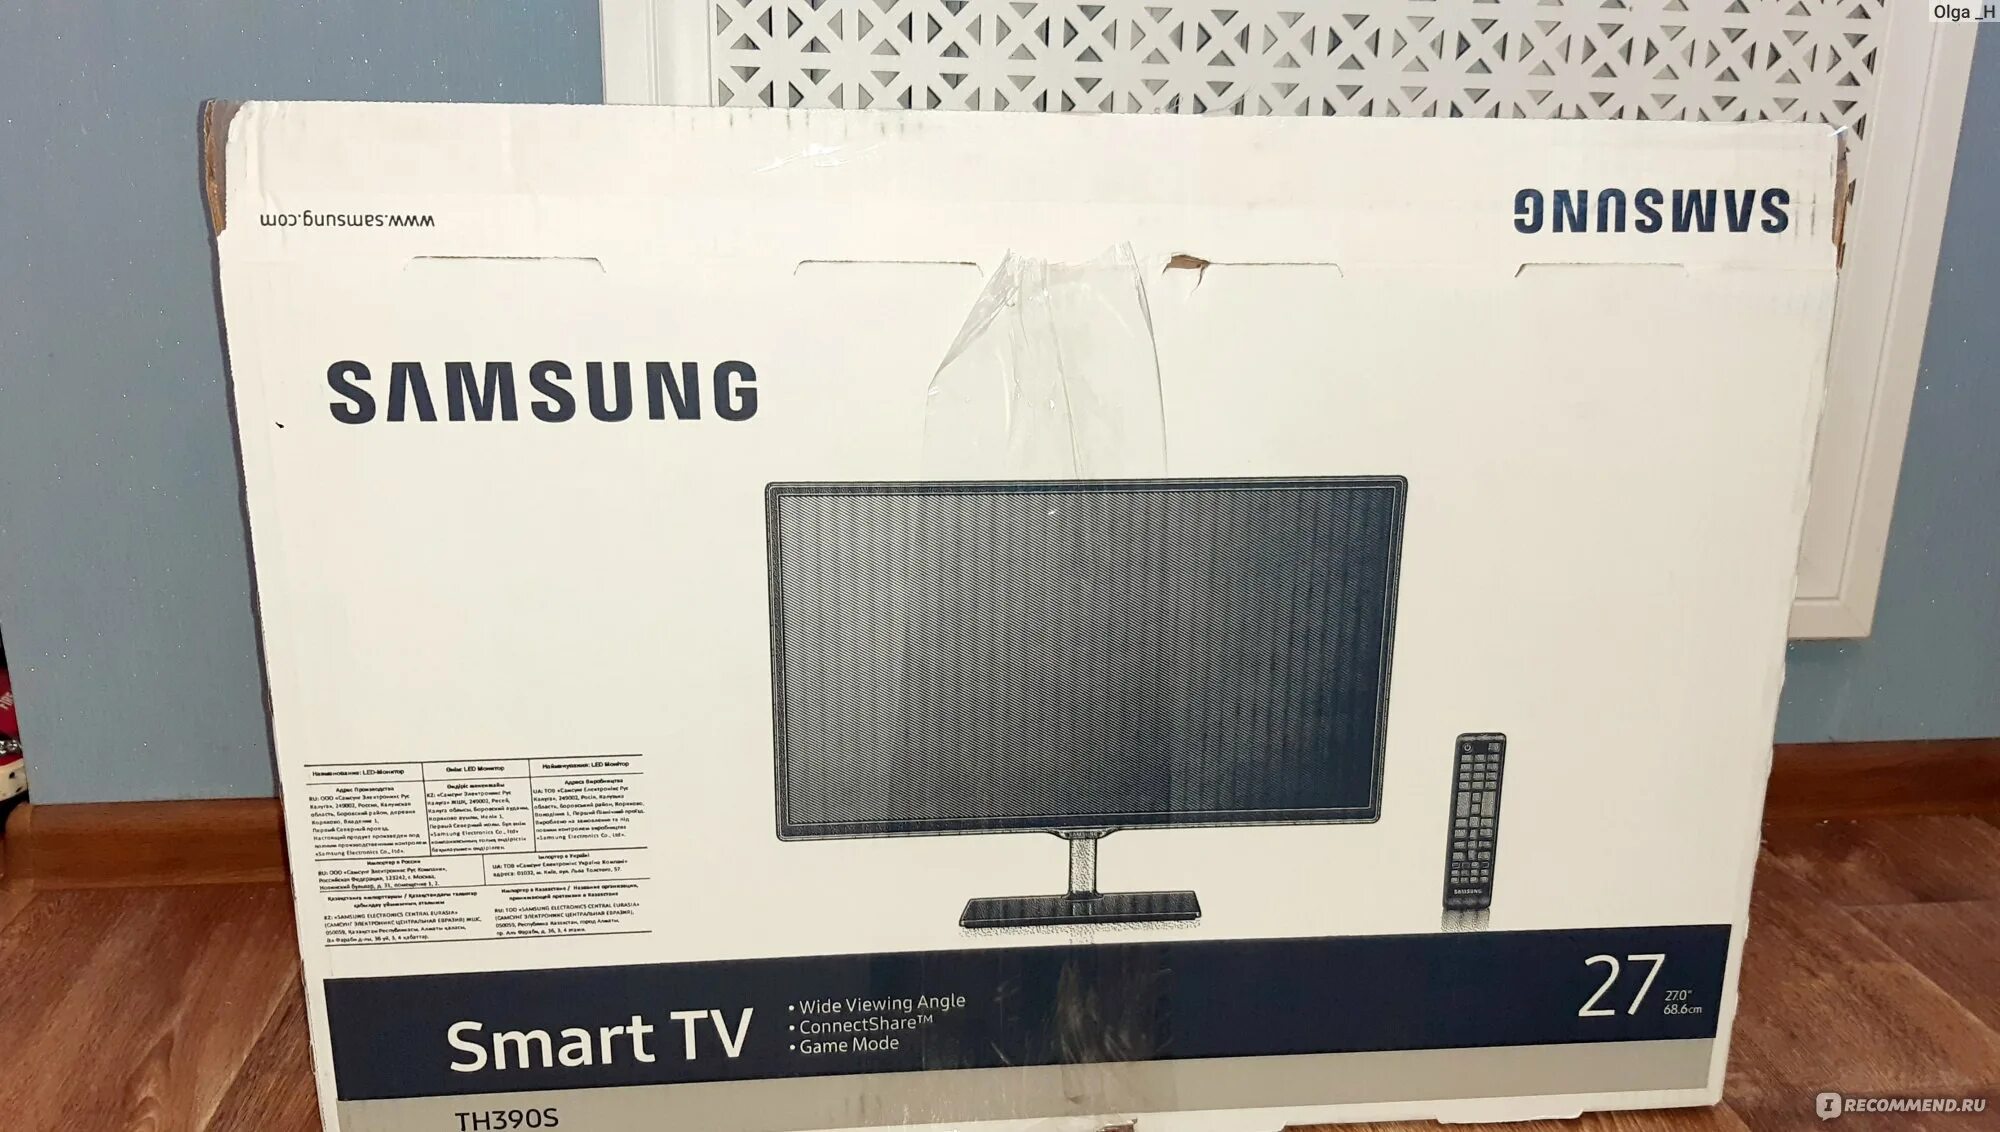 Led-televizor-Samsung-t27h390six с чем сравнивают. Th390s Samsung габариты 27 дюймов.